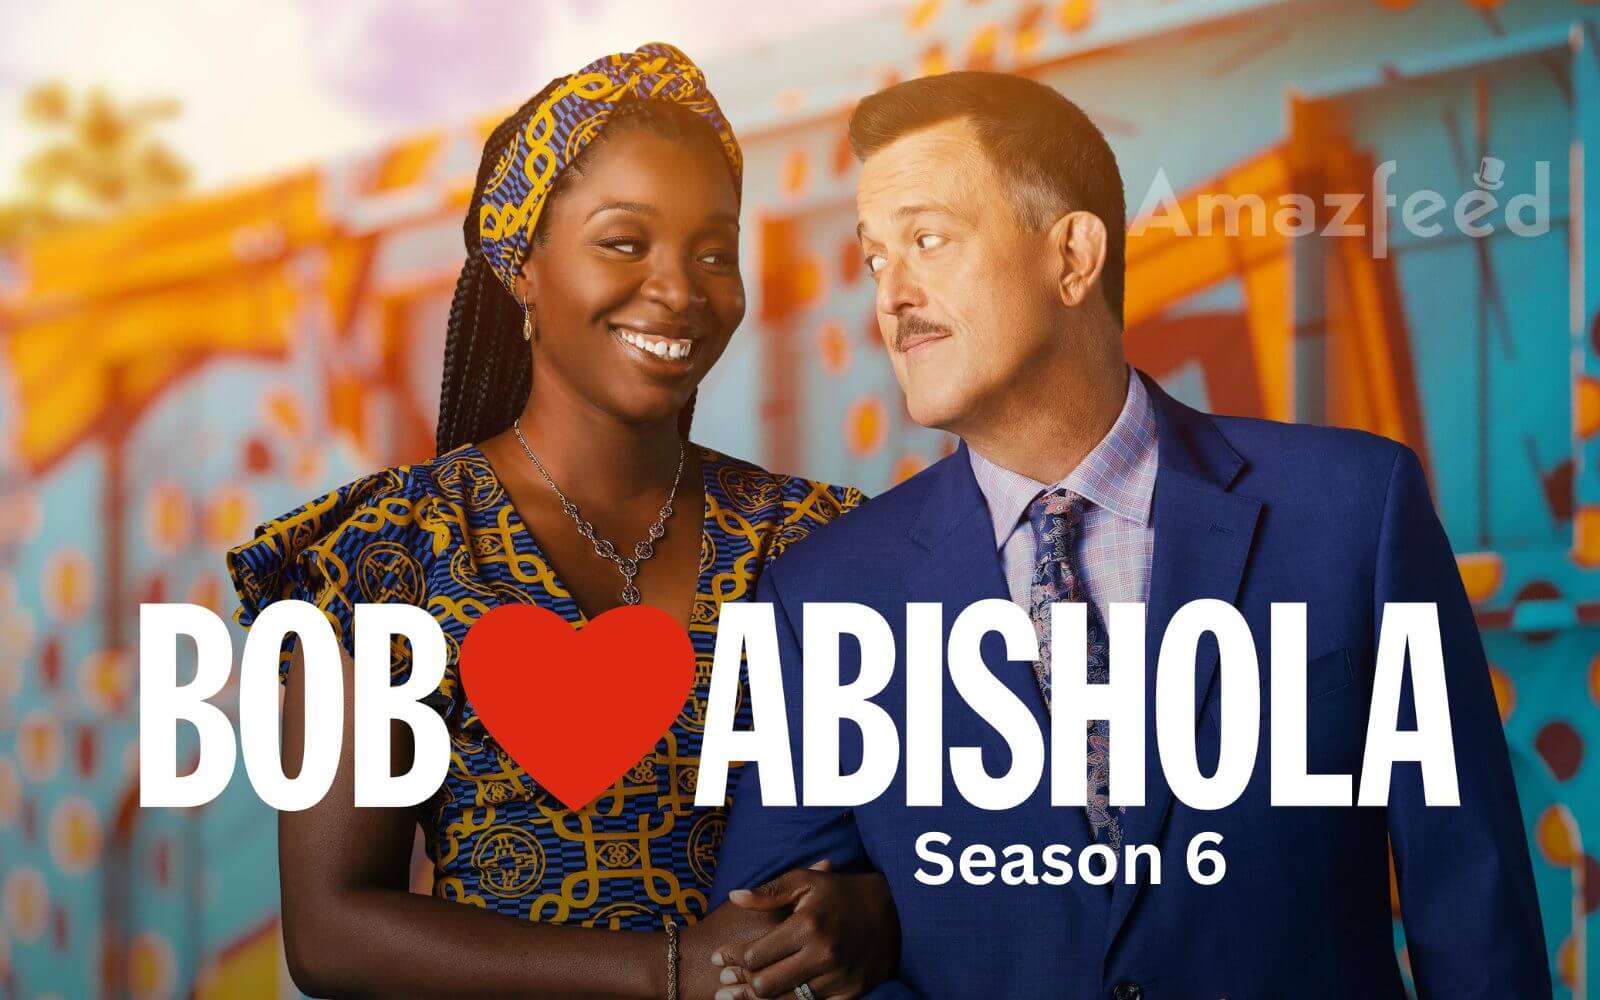 Bob Hearts Abishola season 6 release date